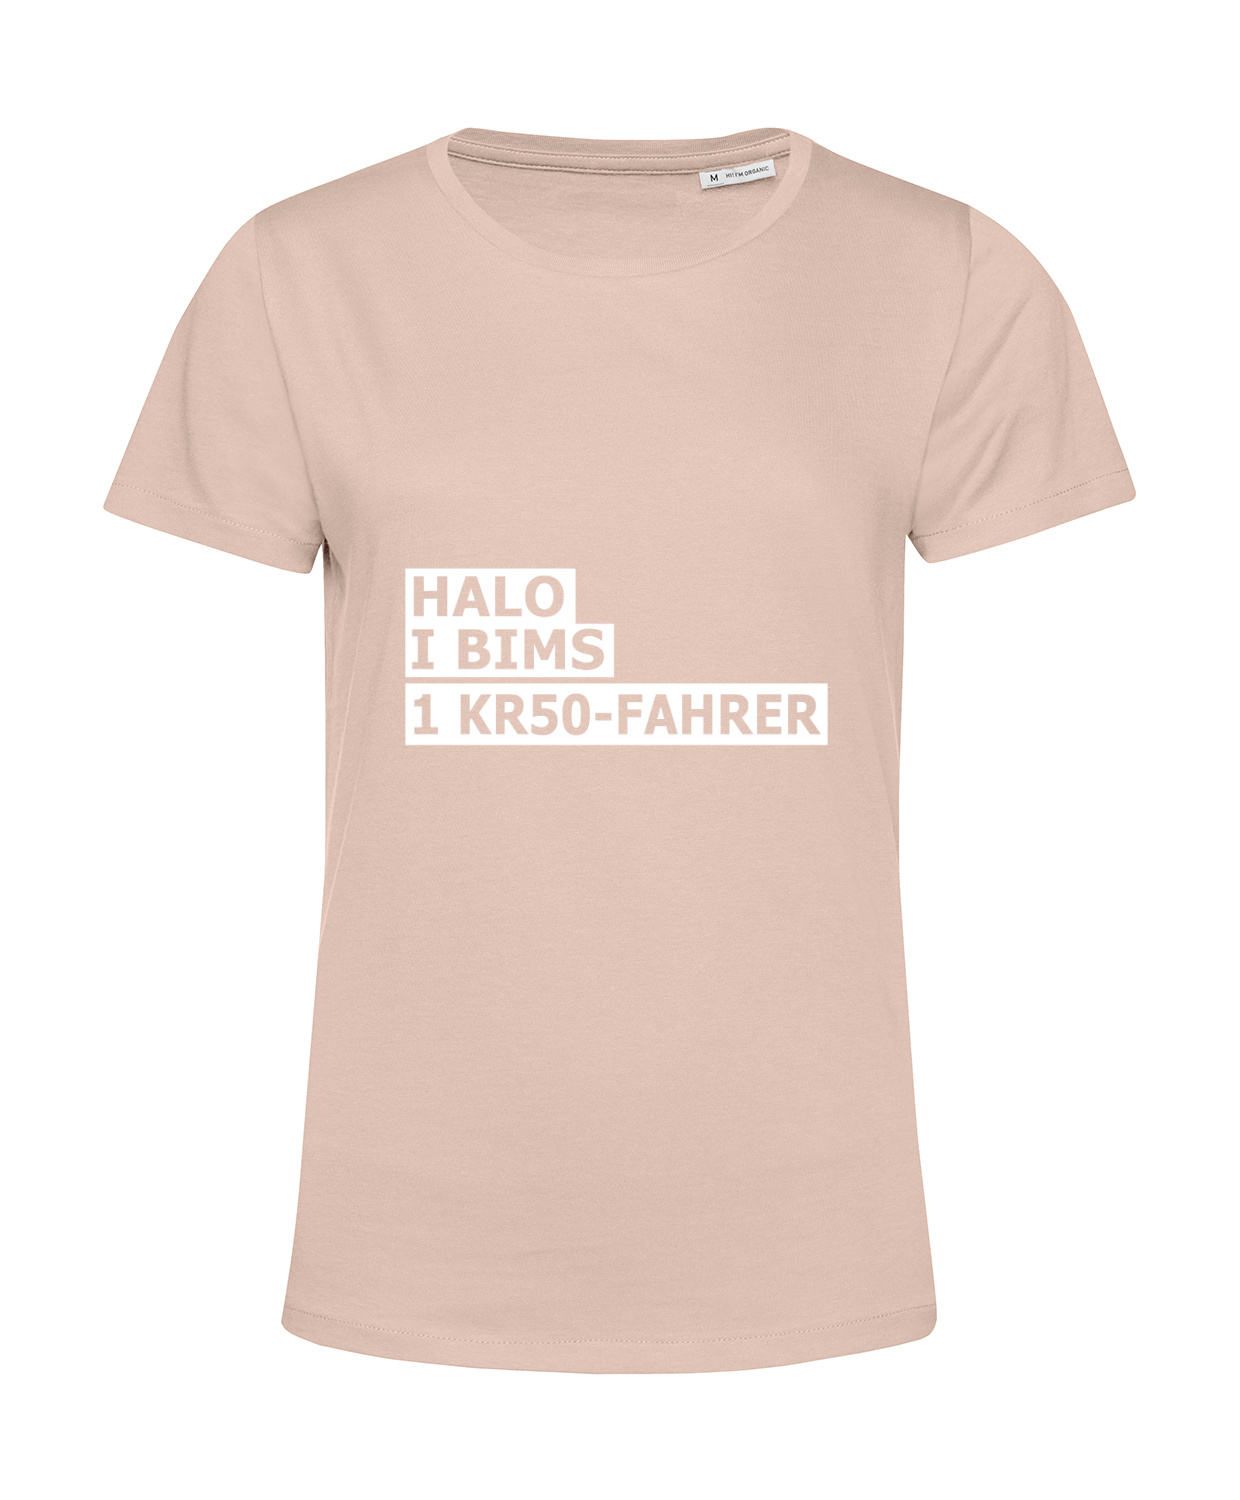 Nachhaltiges T-Shirt Damen 2Takter - Halo I bims 1 KR50-Fahrer